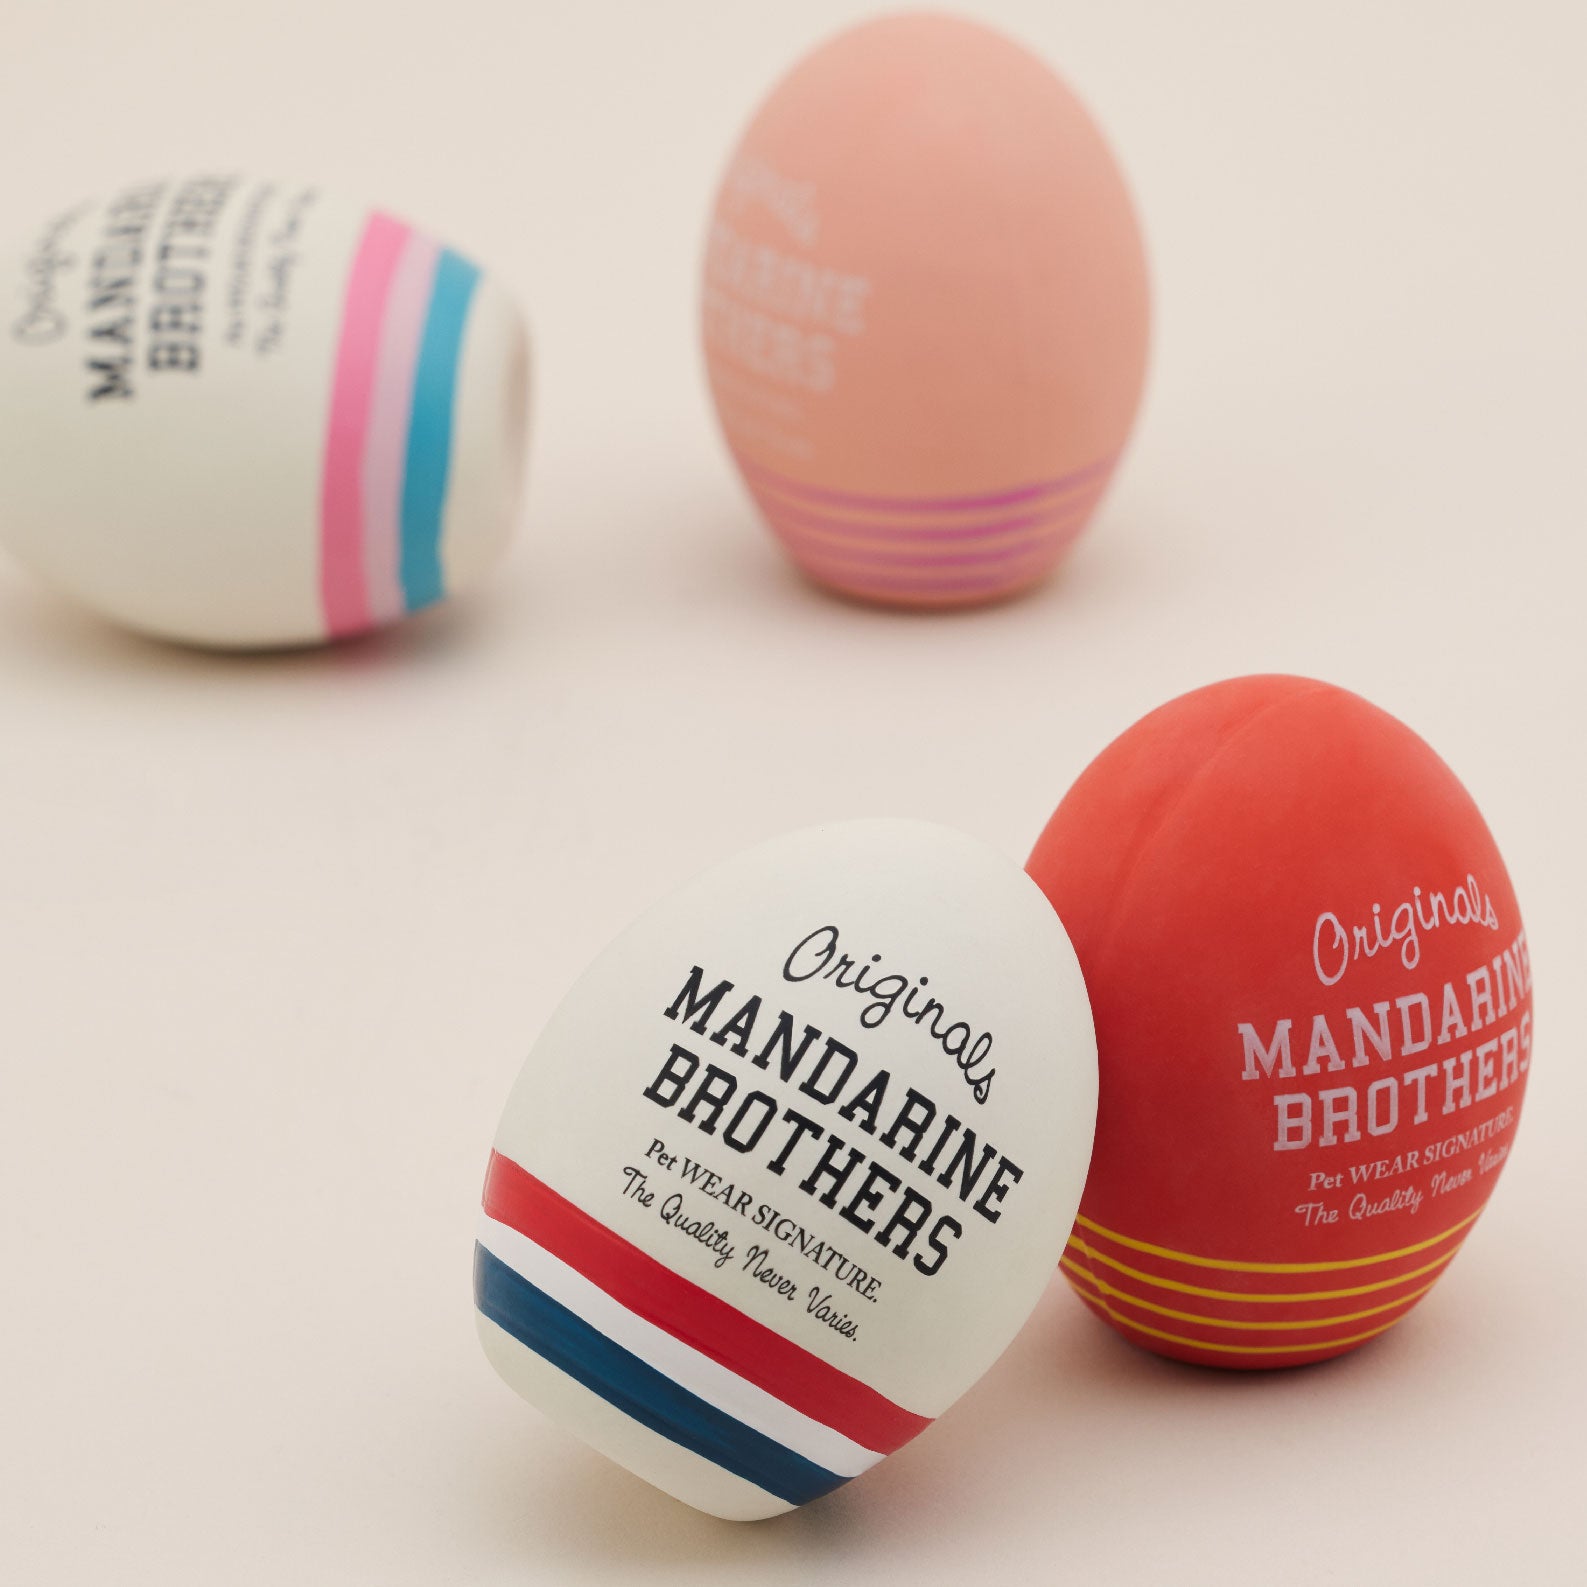 Mandarine Brothers Latex Egg Toy | ลูกบอลยาง สำหรับสัตว์เลี้ยง